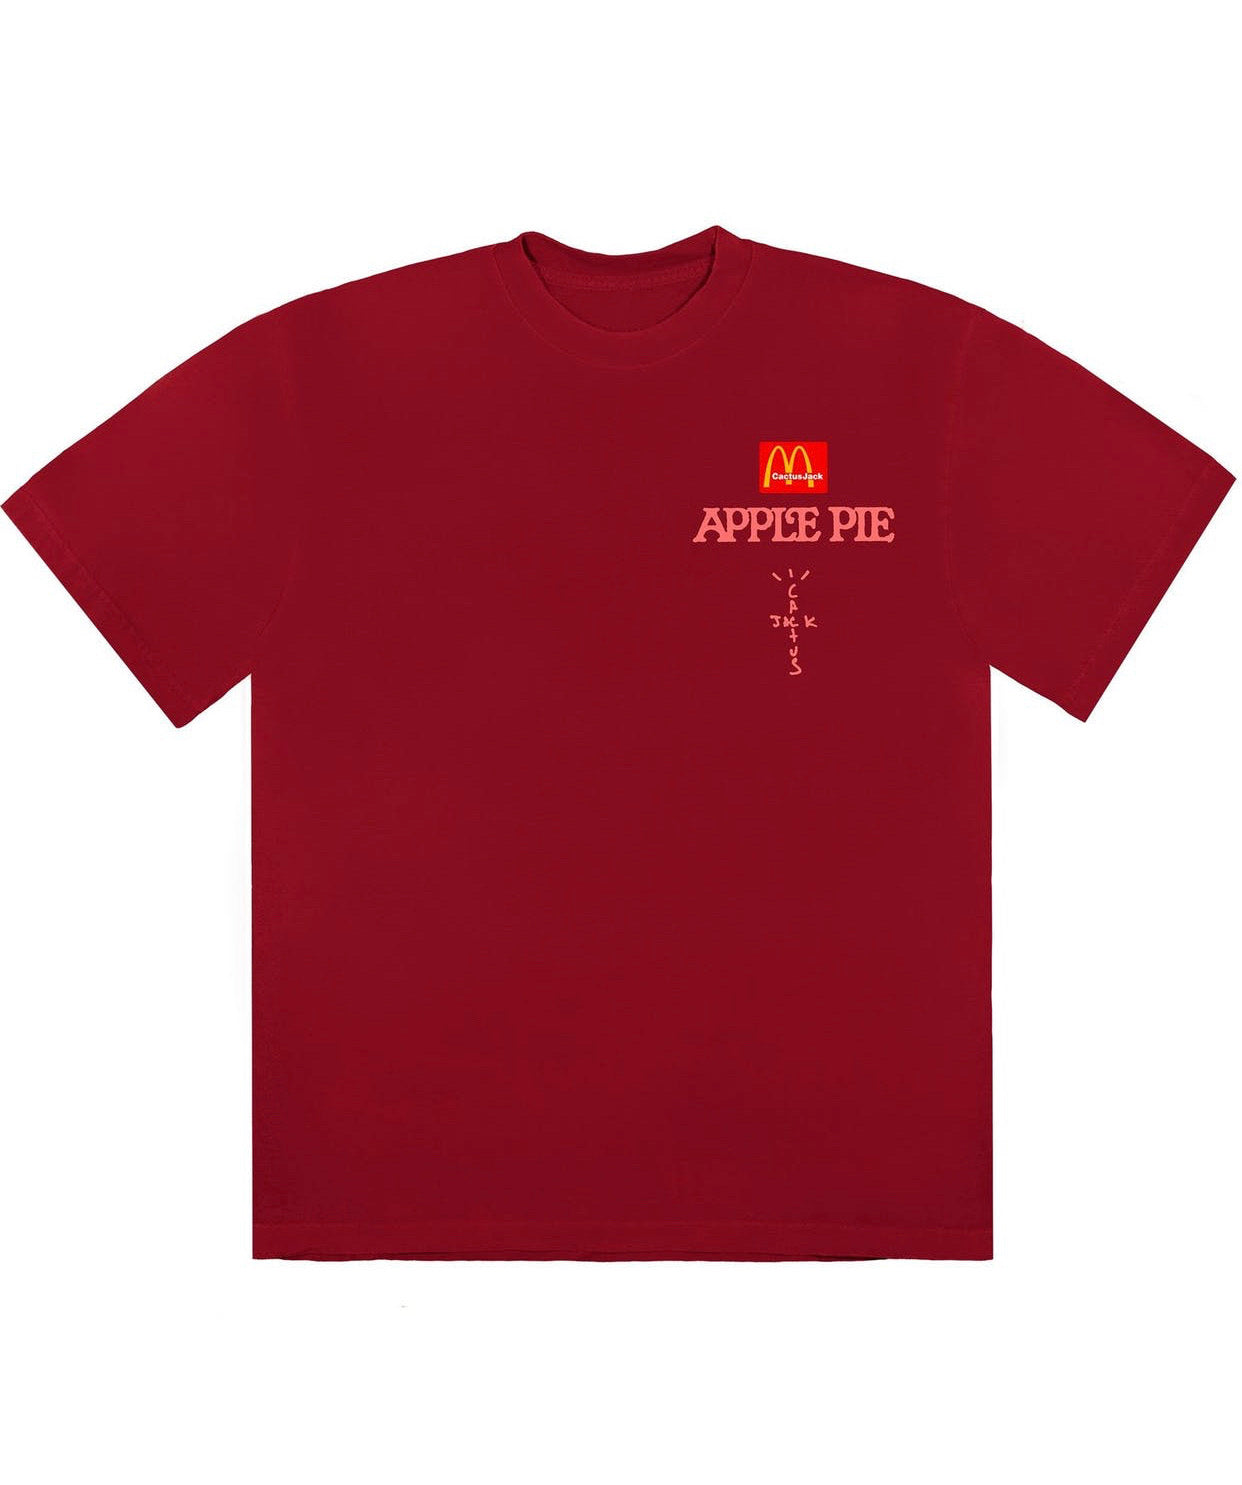 Travis Scott x McDonald’s Apple Pie Red Tee